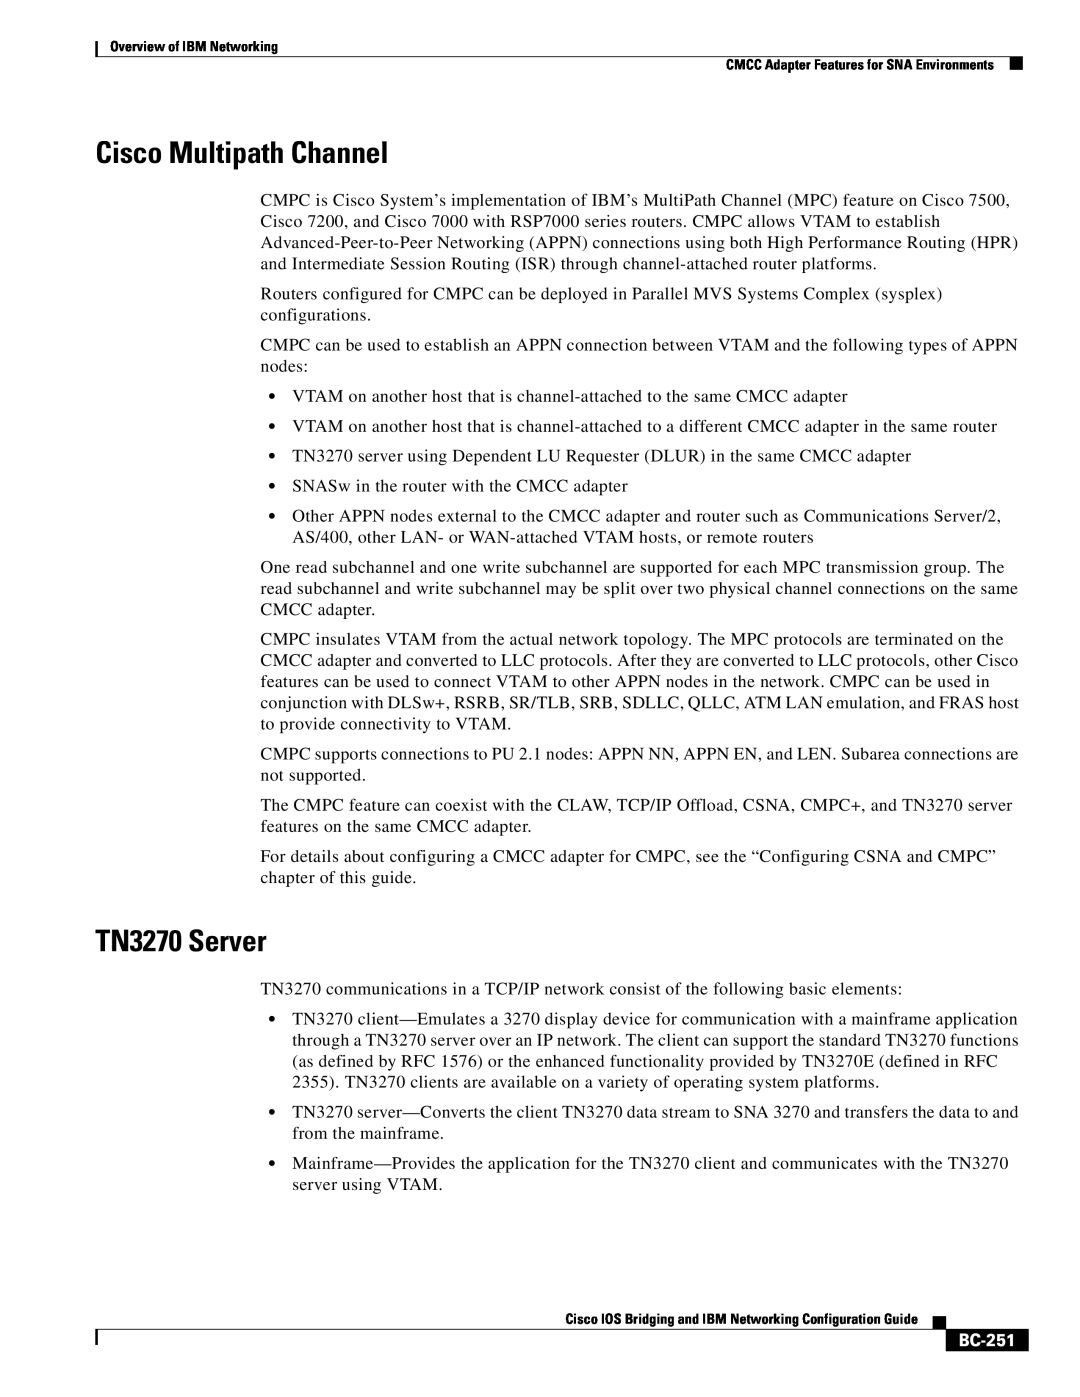 IBM BC-203 manual Cisco Multipath Channel, TN3270 Server, BC-251 